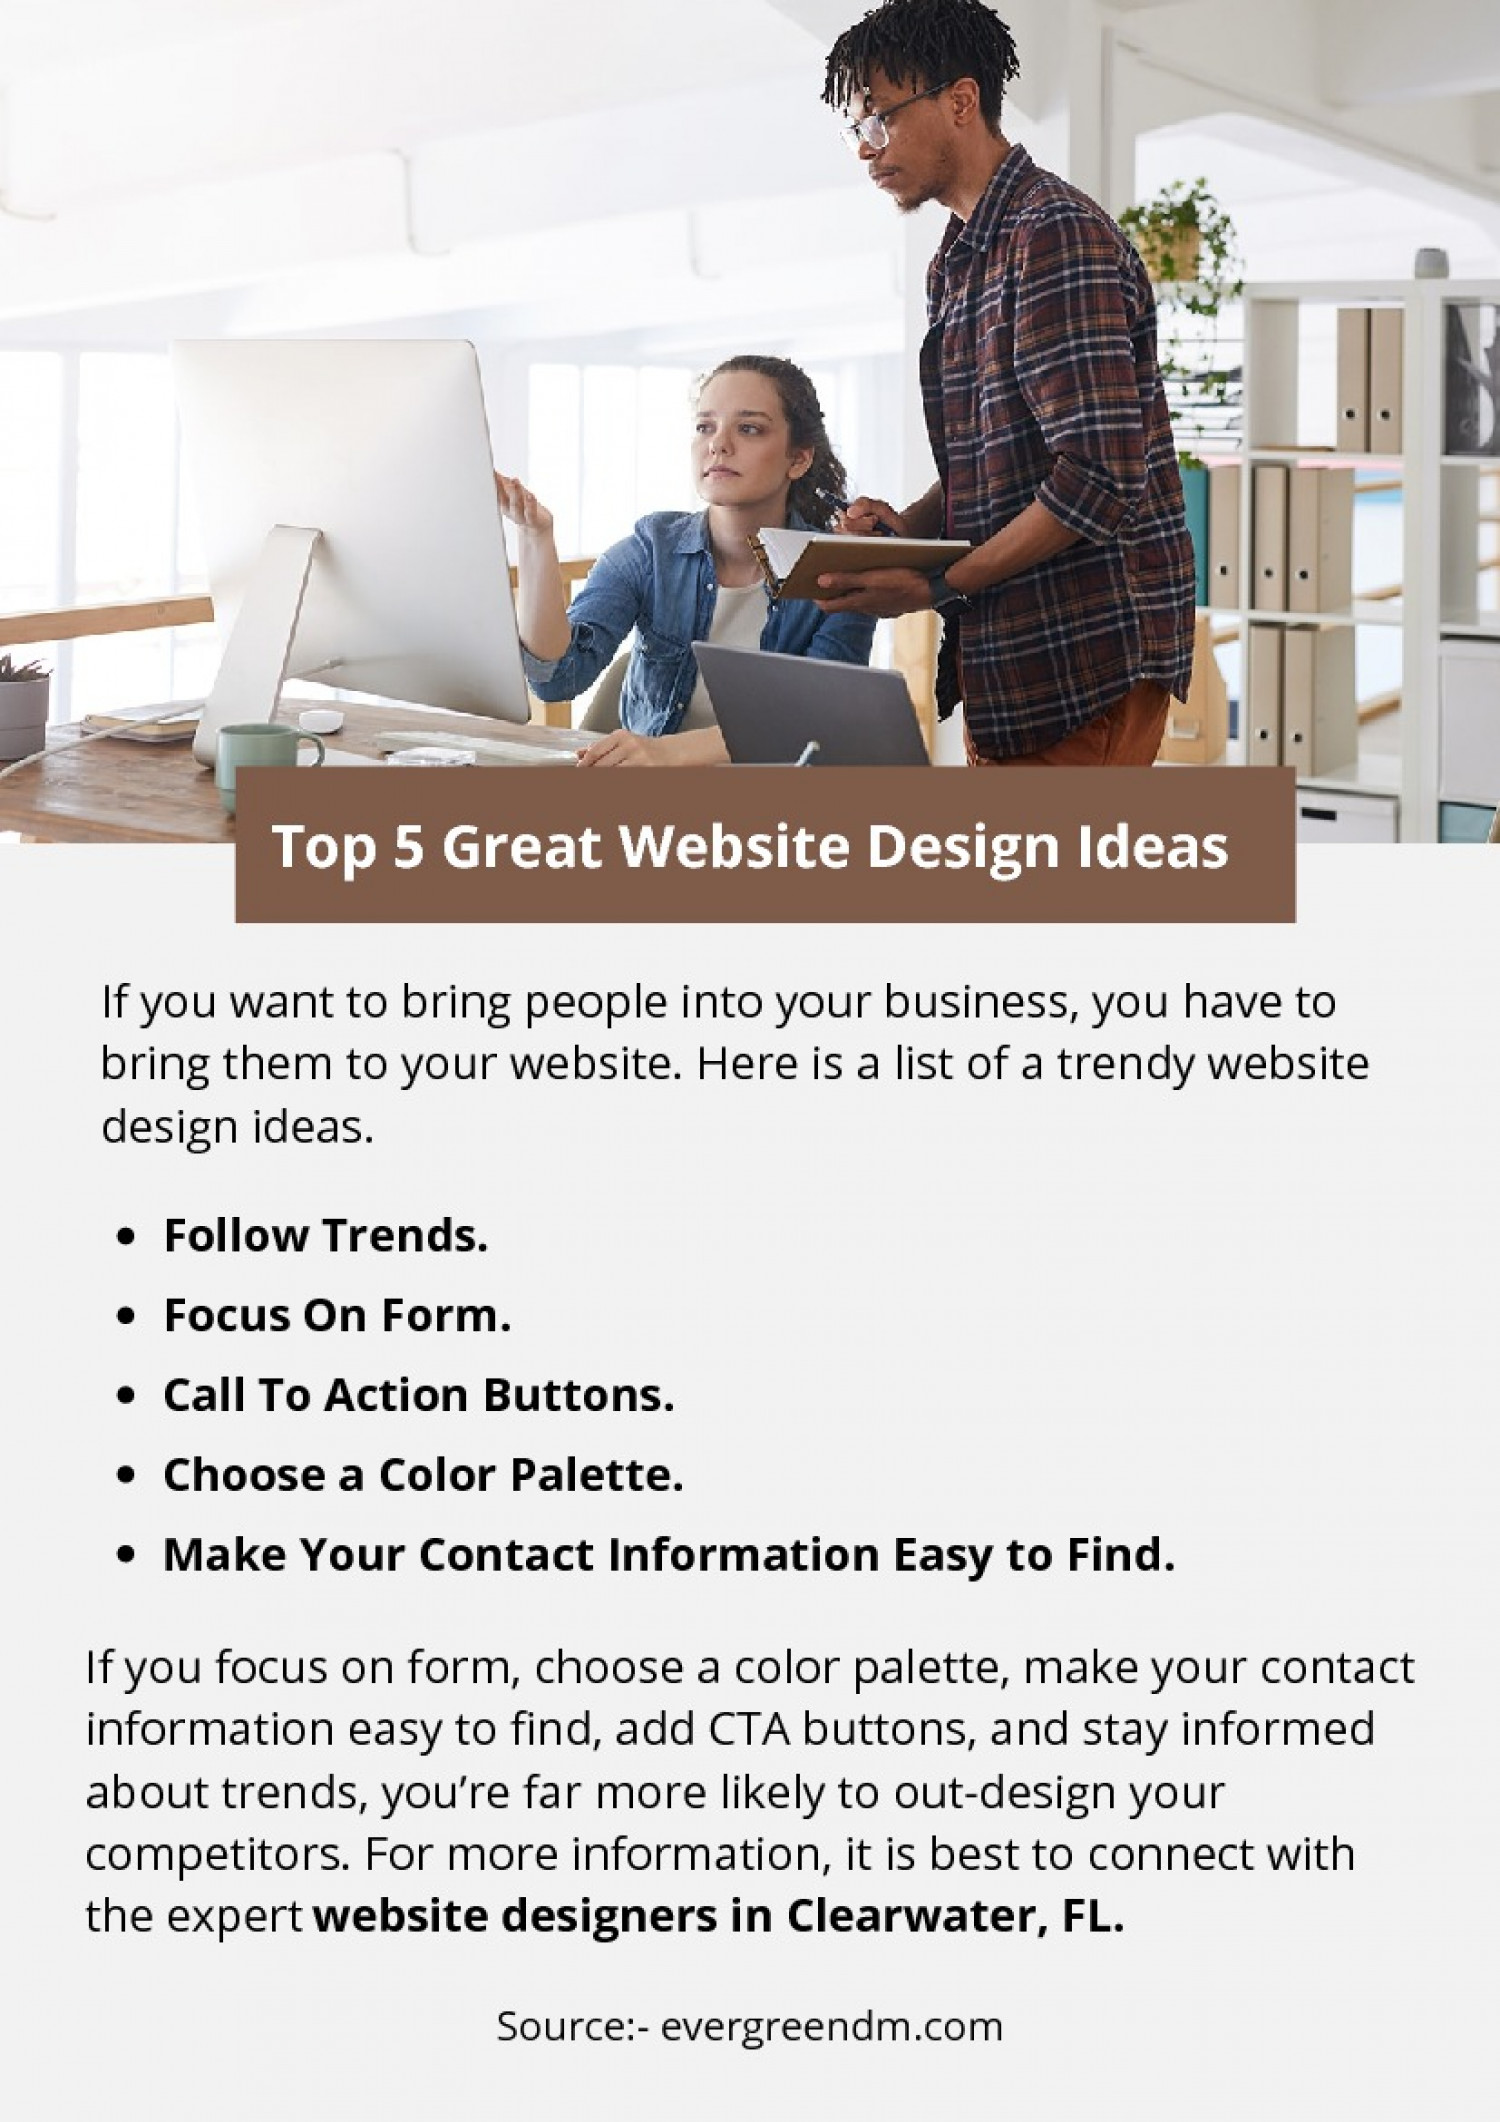 Top 5 Great Website Design Ideas Infographic